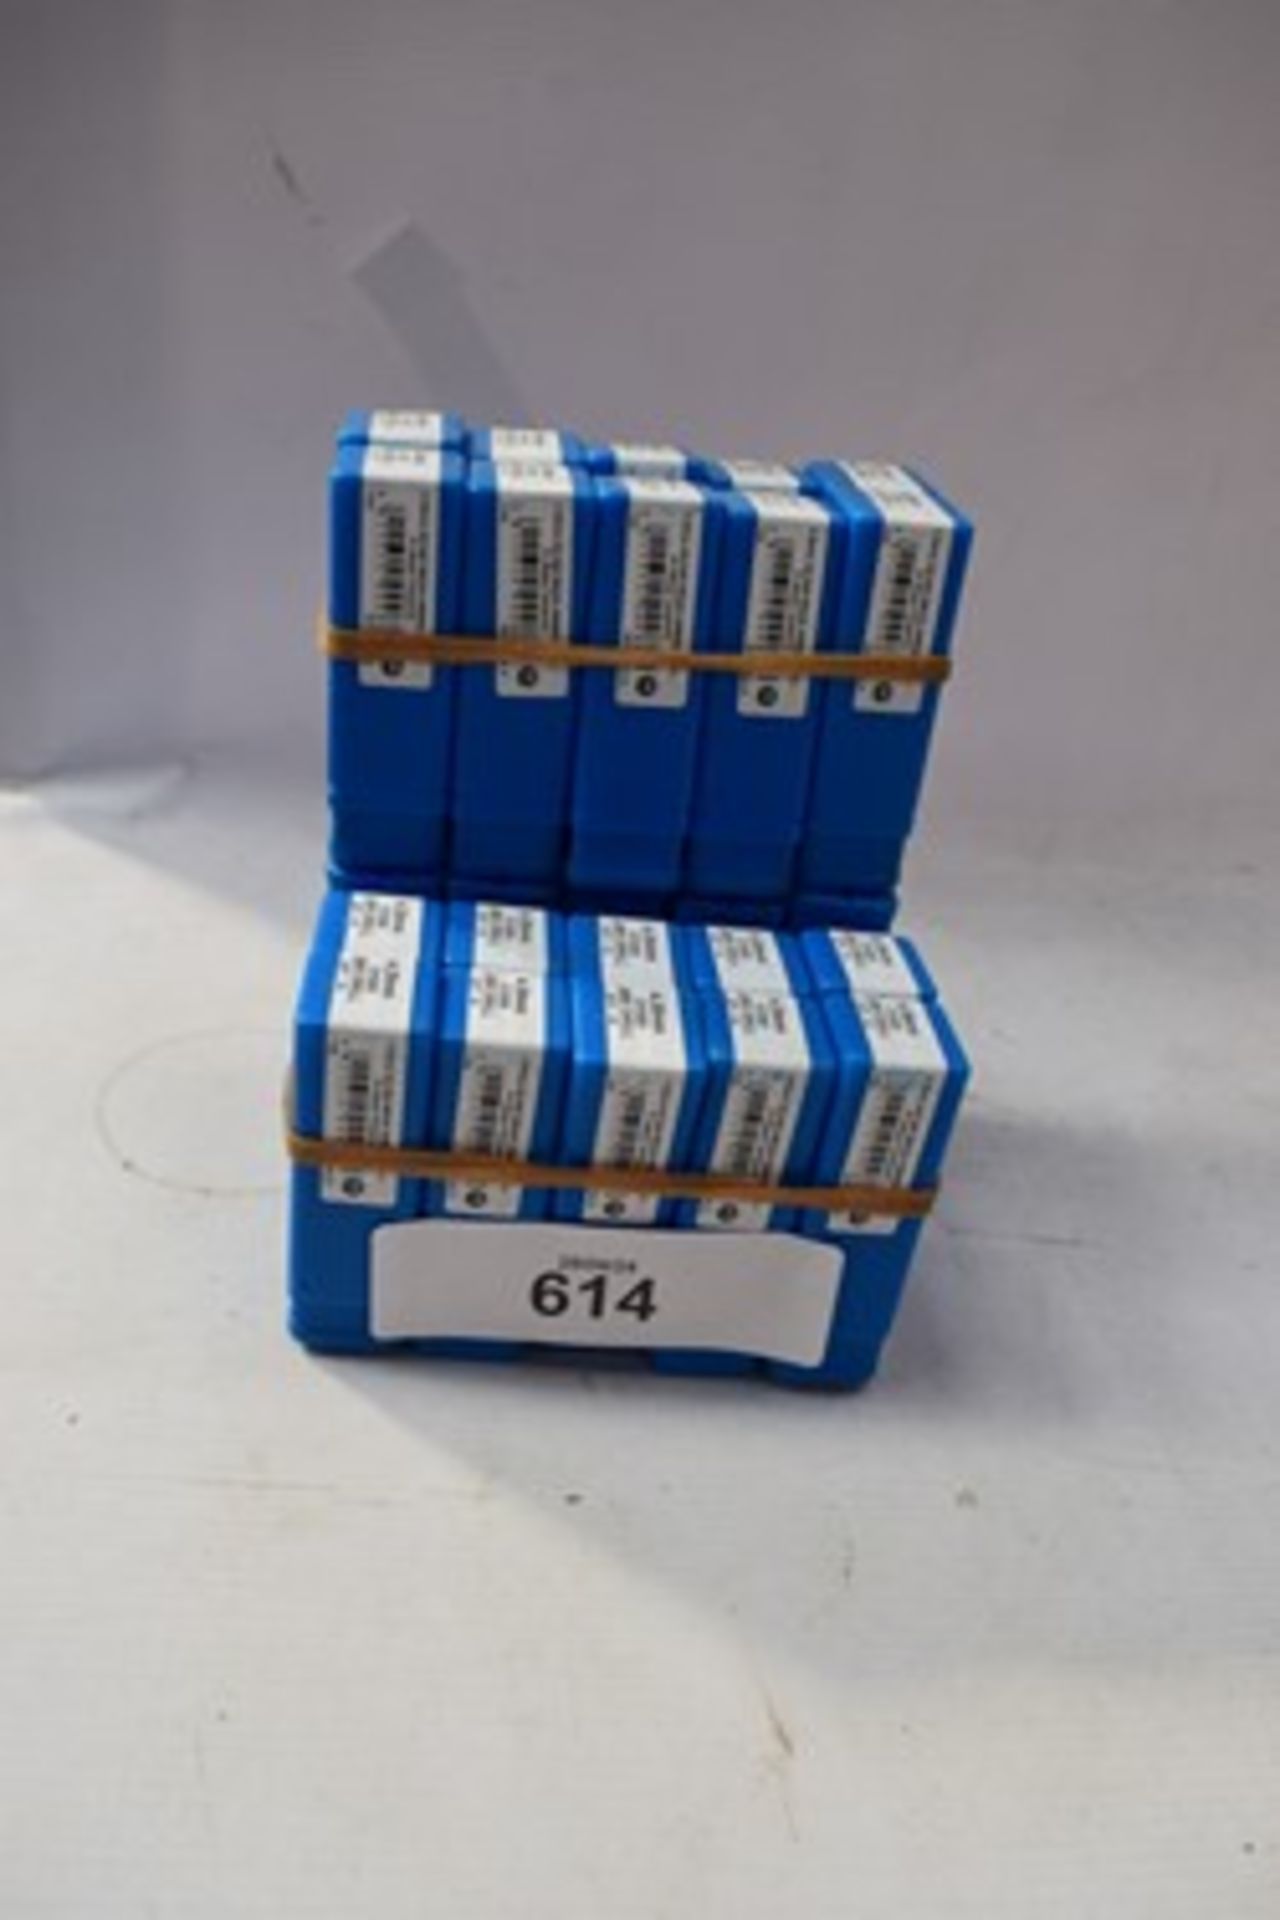 300 x Presto 4.20mm jobber drills - New in box (GS&)